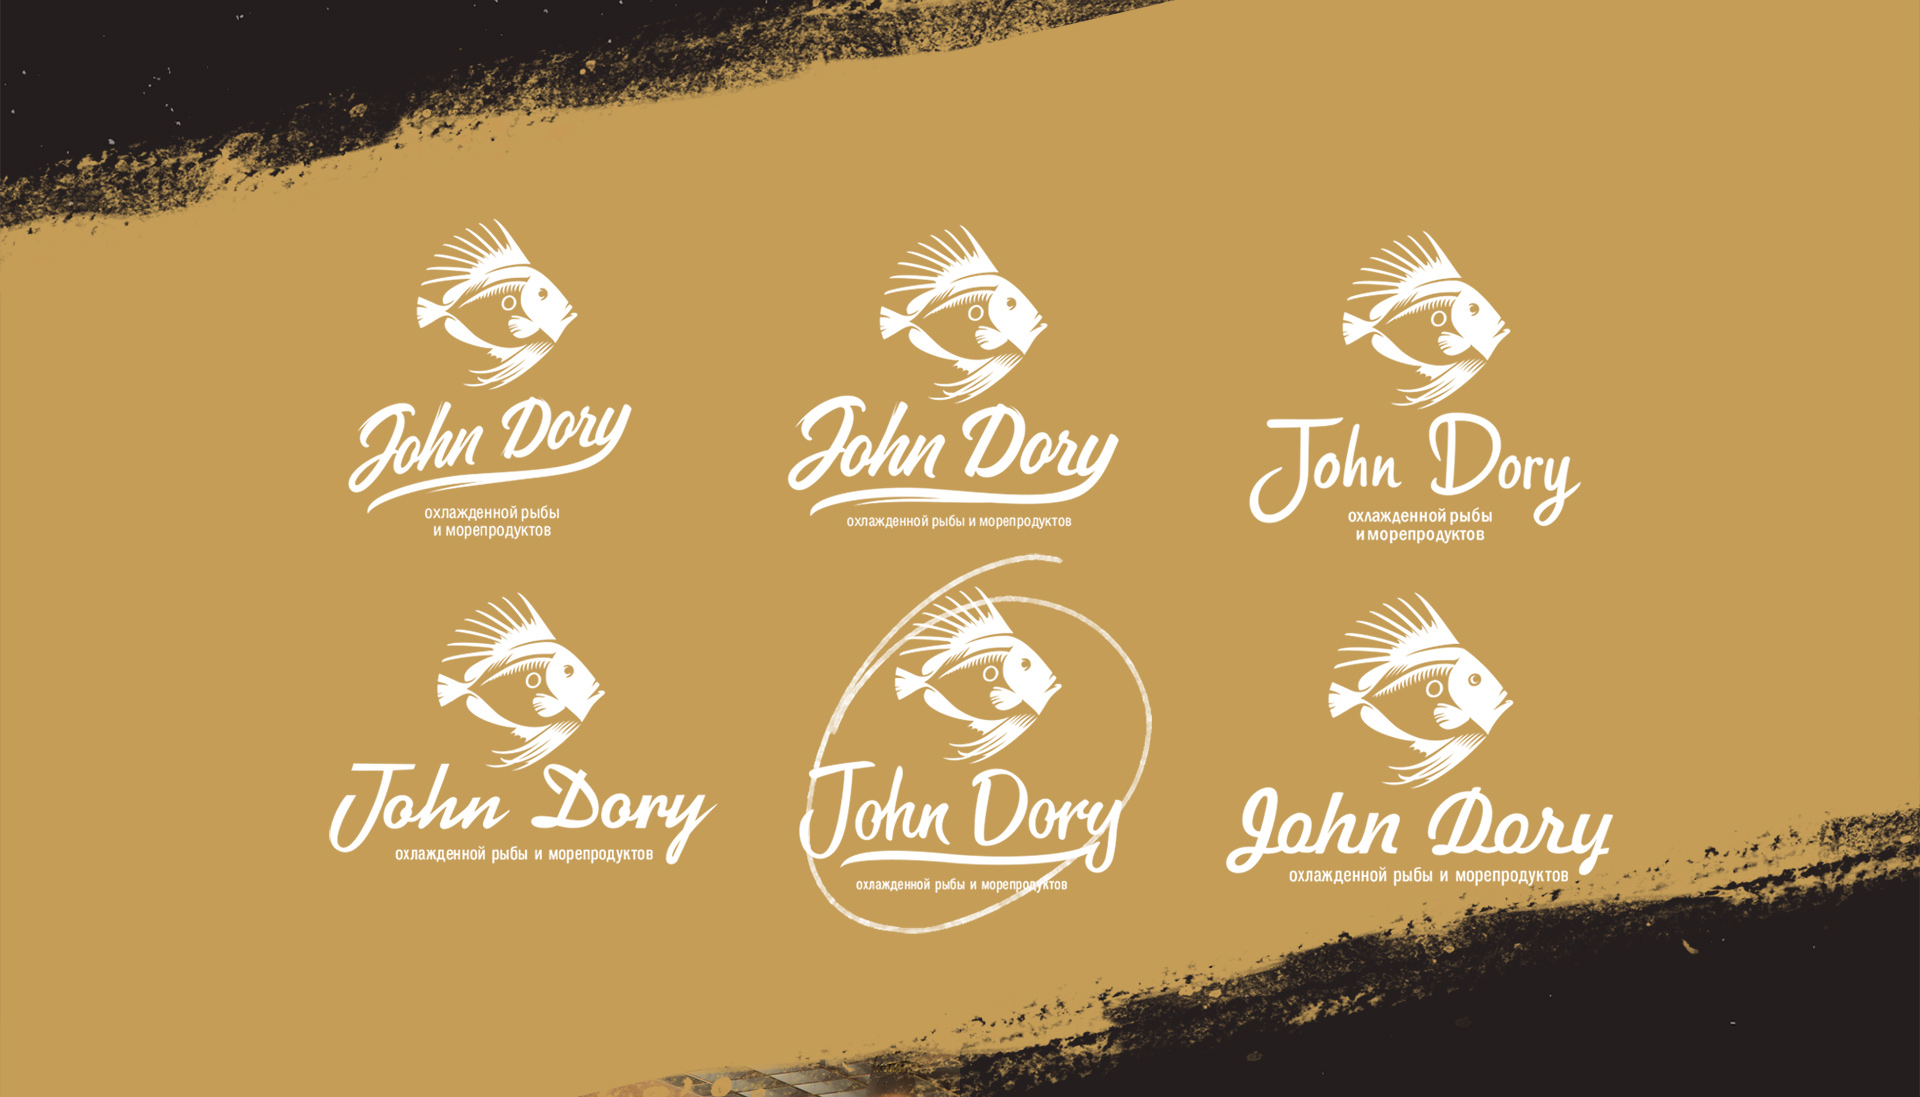 John Dory image